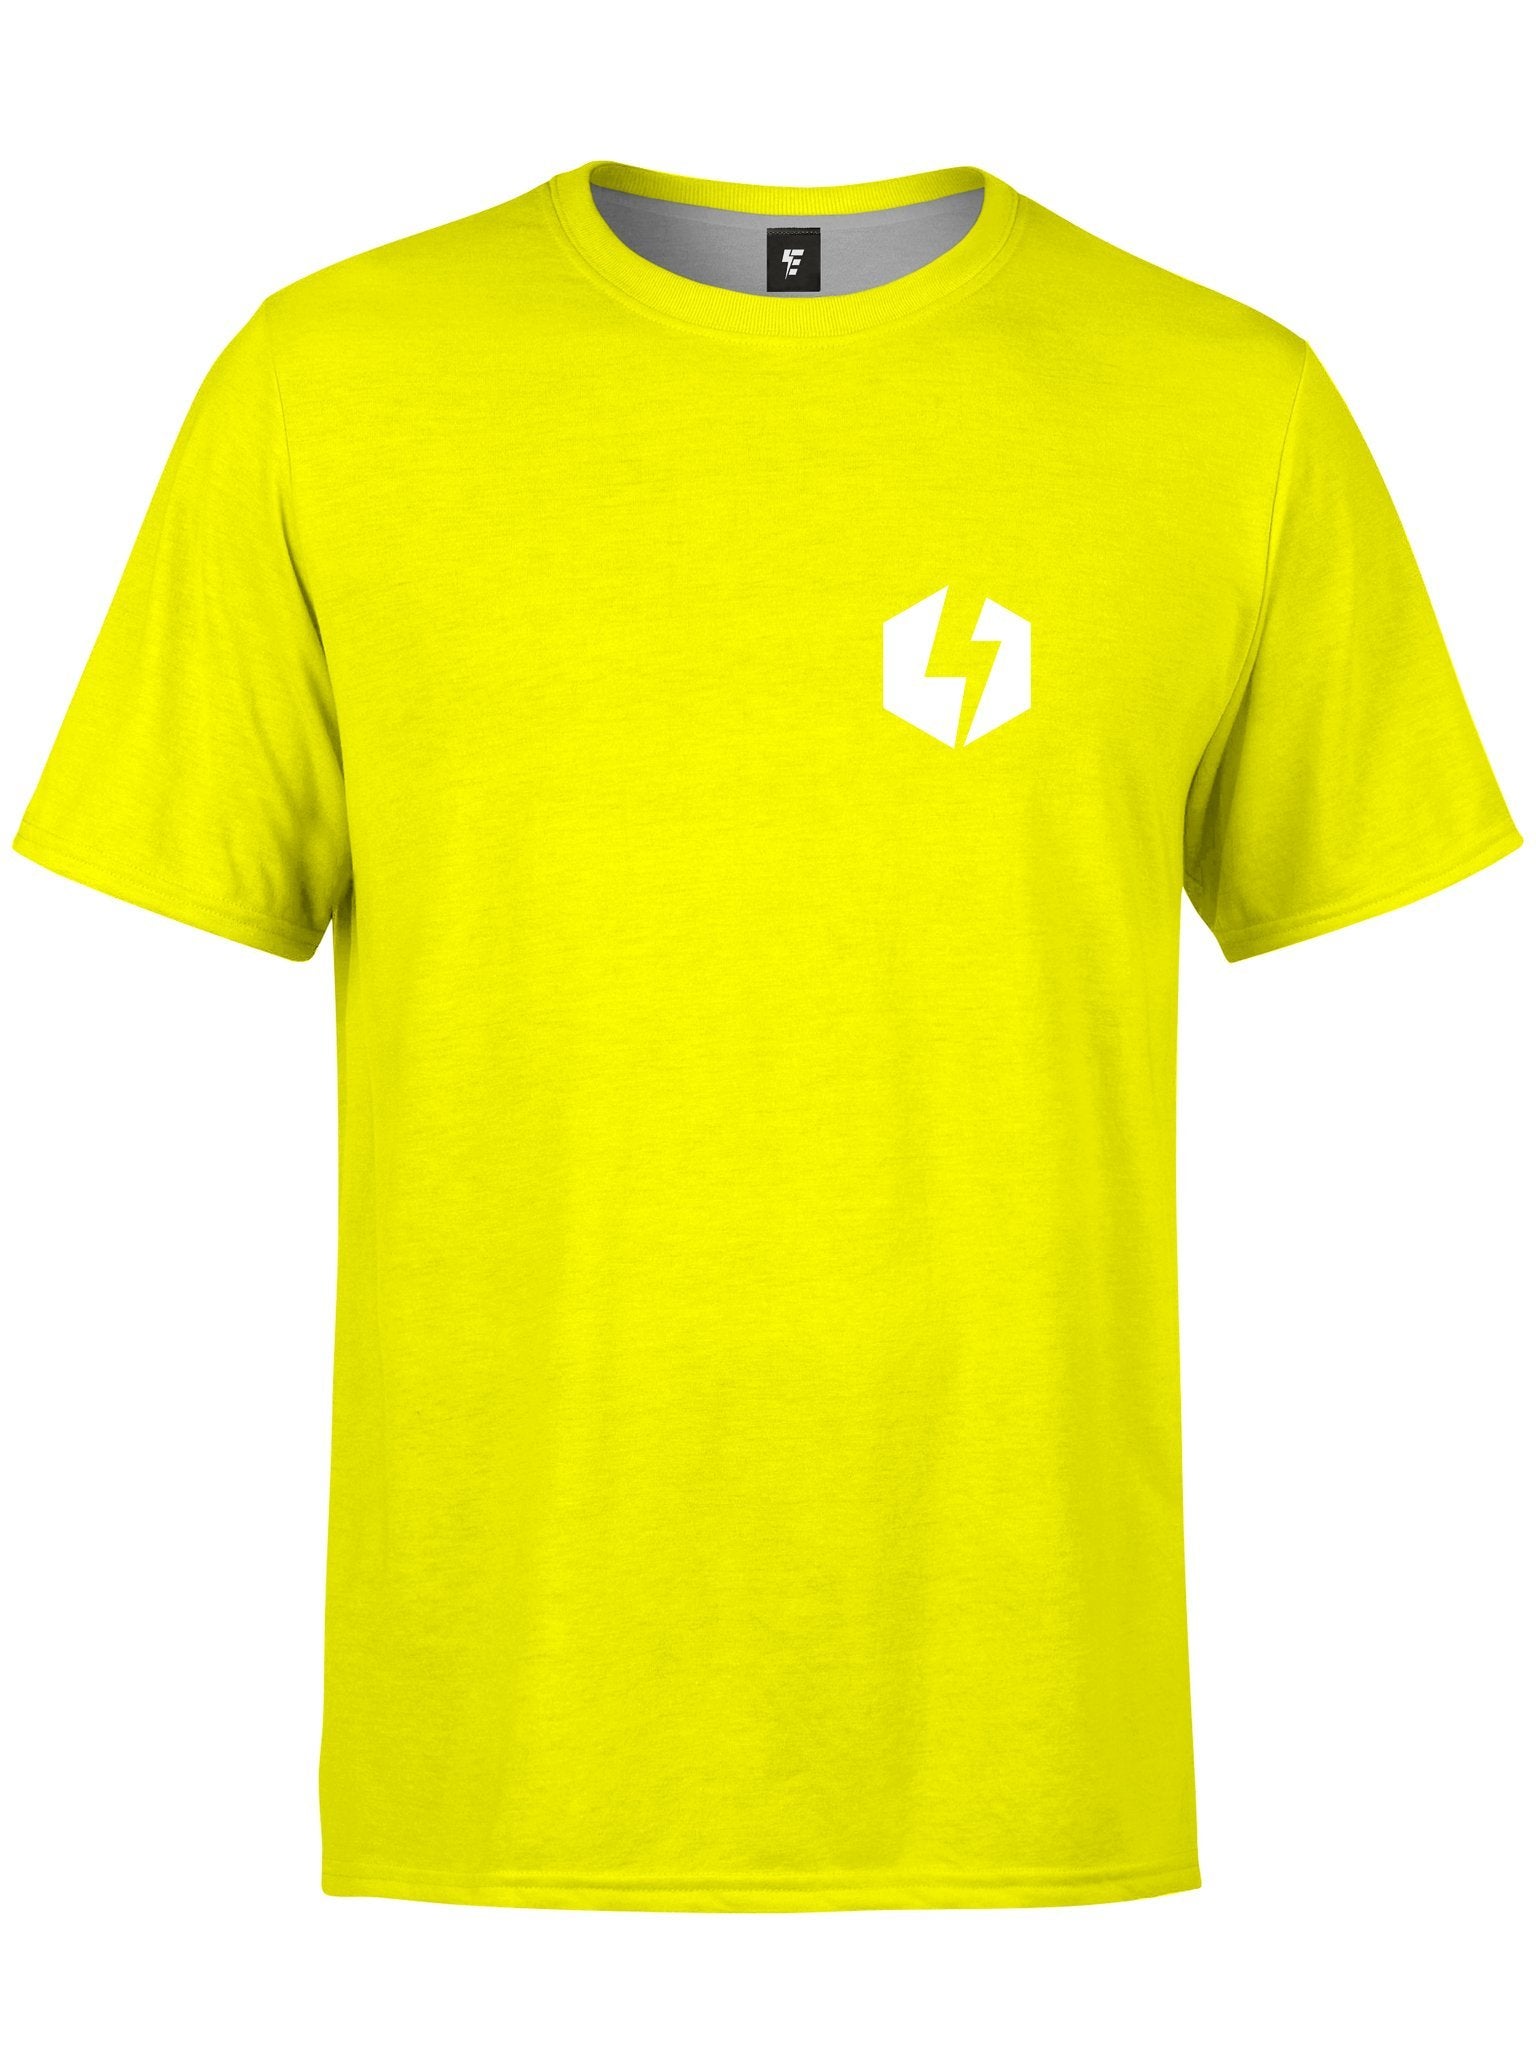 Electro Bolt (Yellow) Unisex Crew T-Shirts Electro Threads 